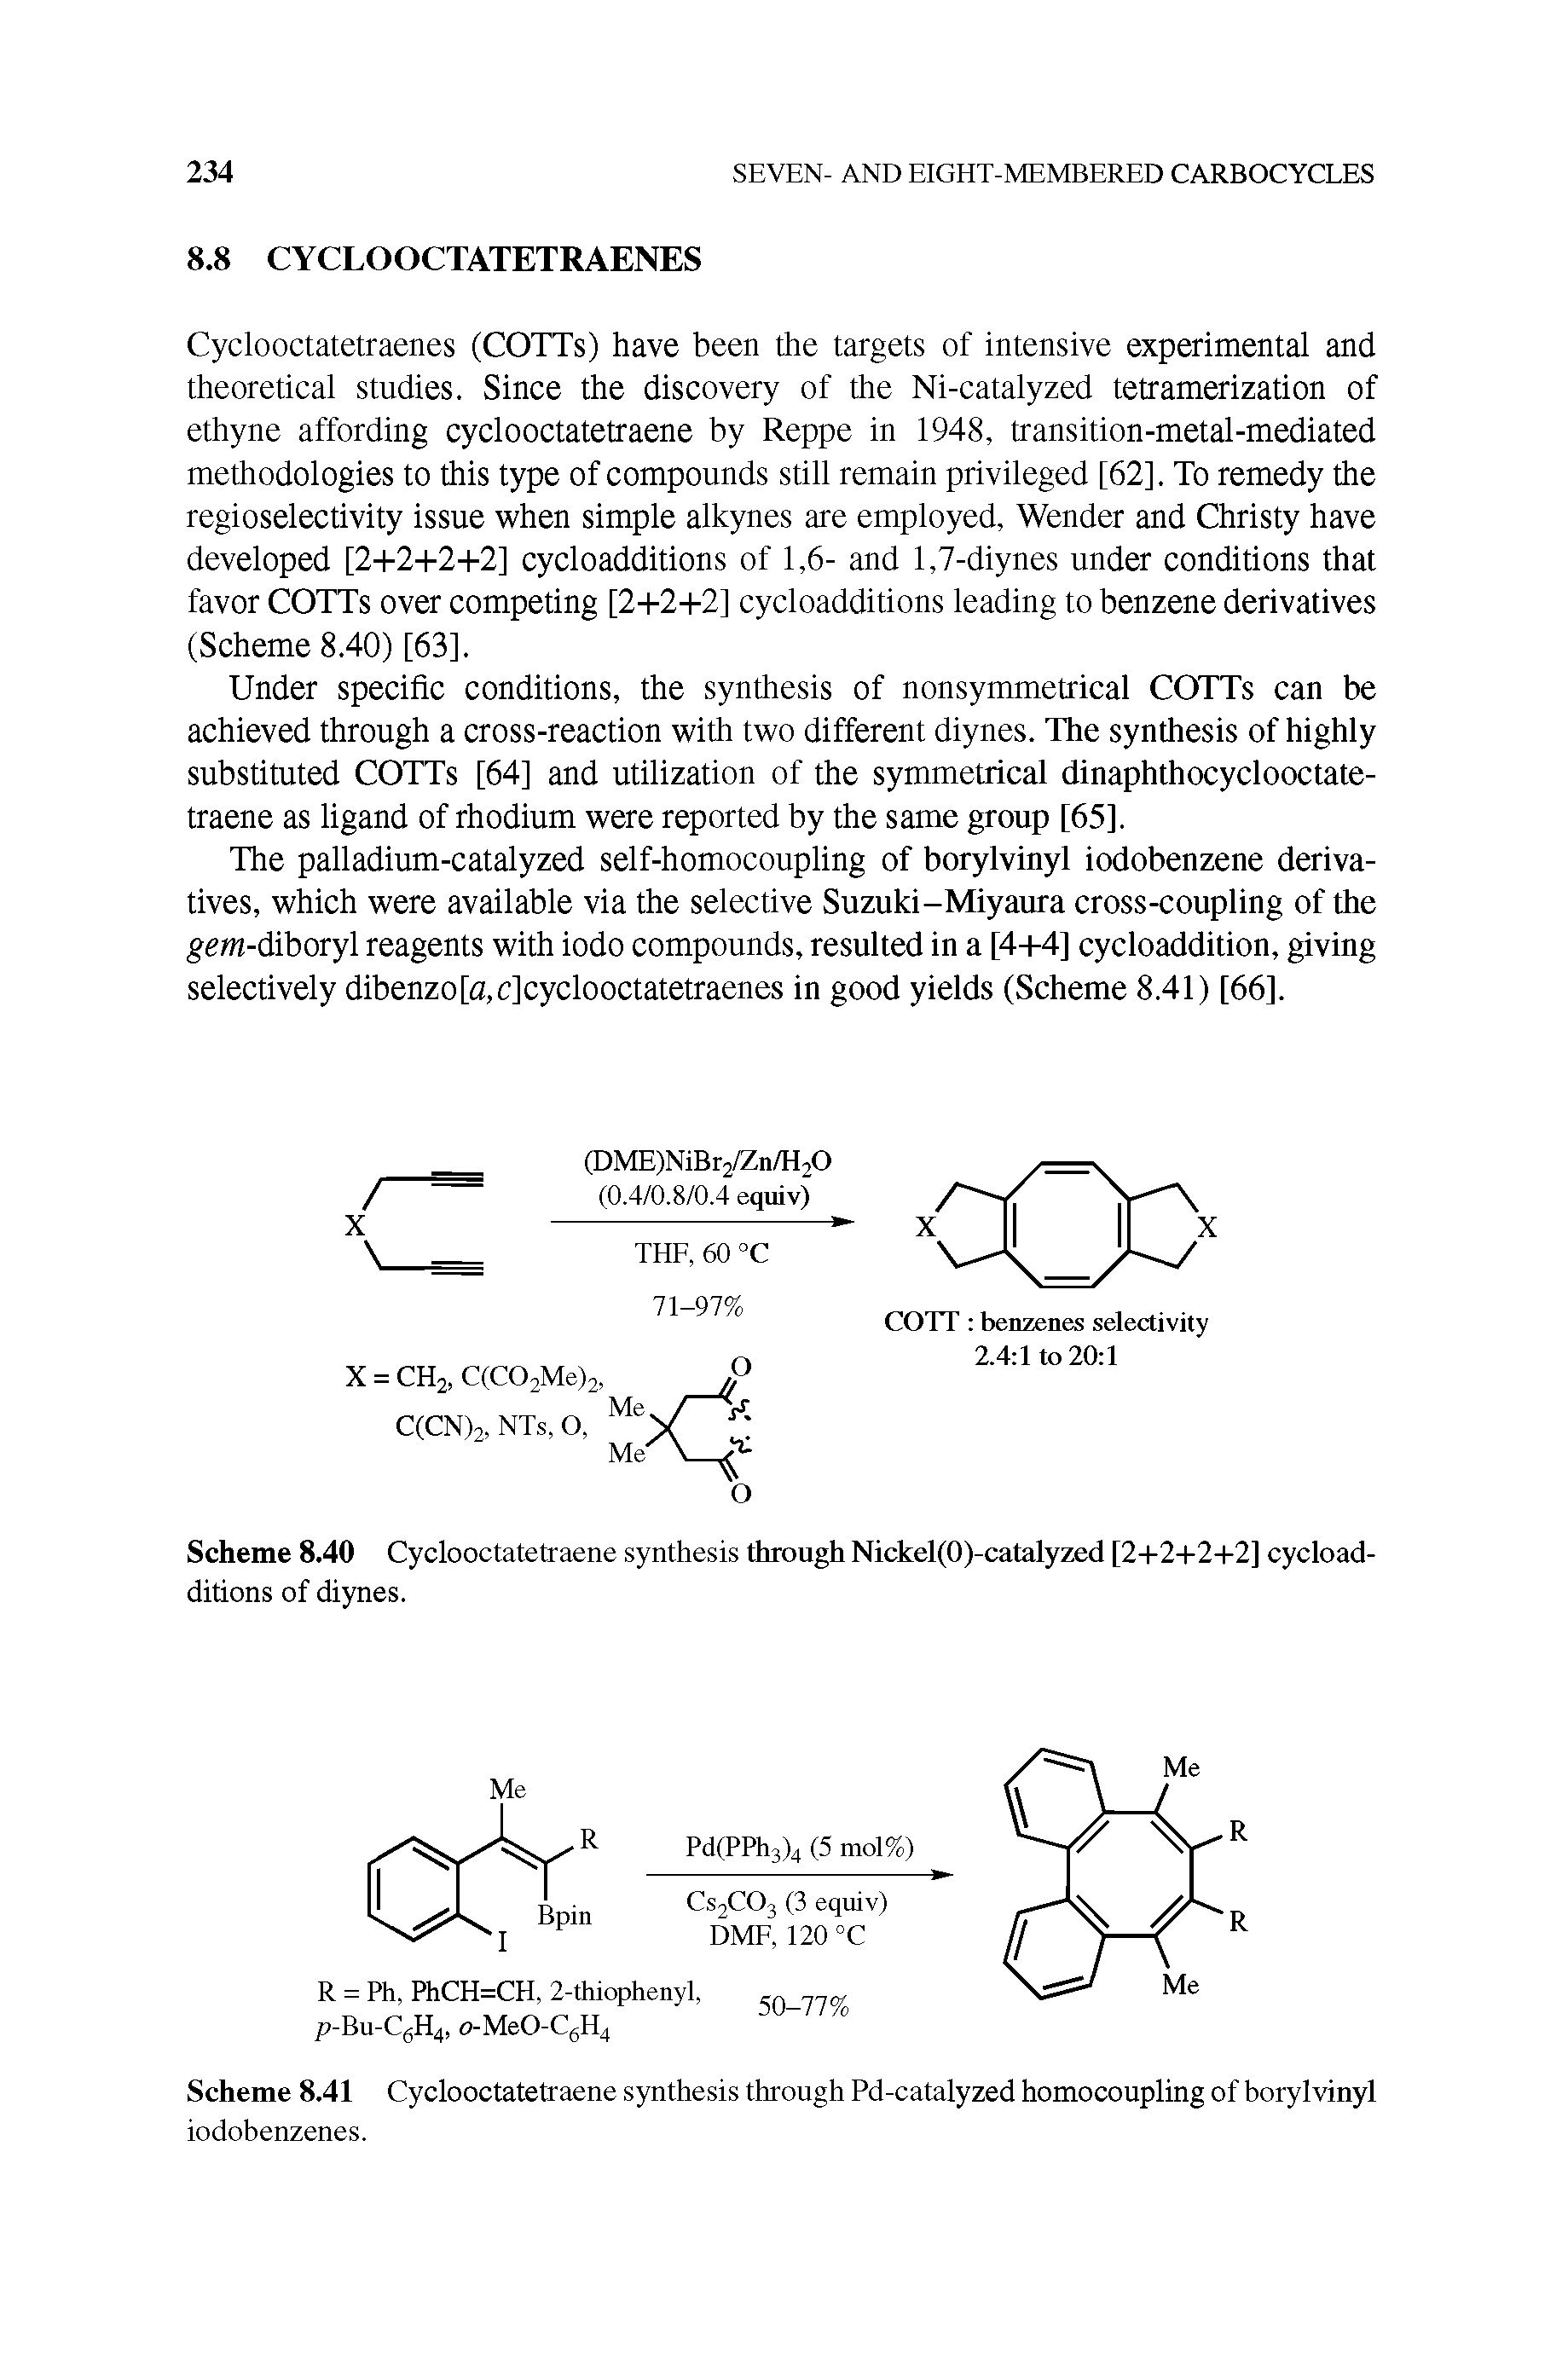 Scheme 8.40 Cyclooctatetraene synthesis through Nickel(0)-catalyzed [2-I-2-I-2-I-2] cycloadditions of diynes.